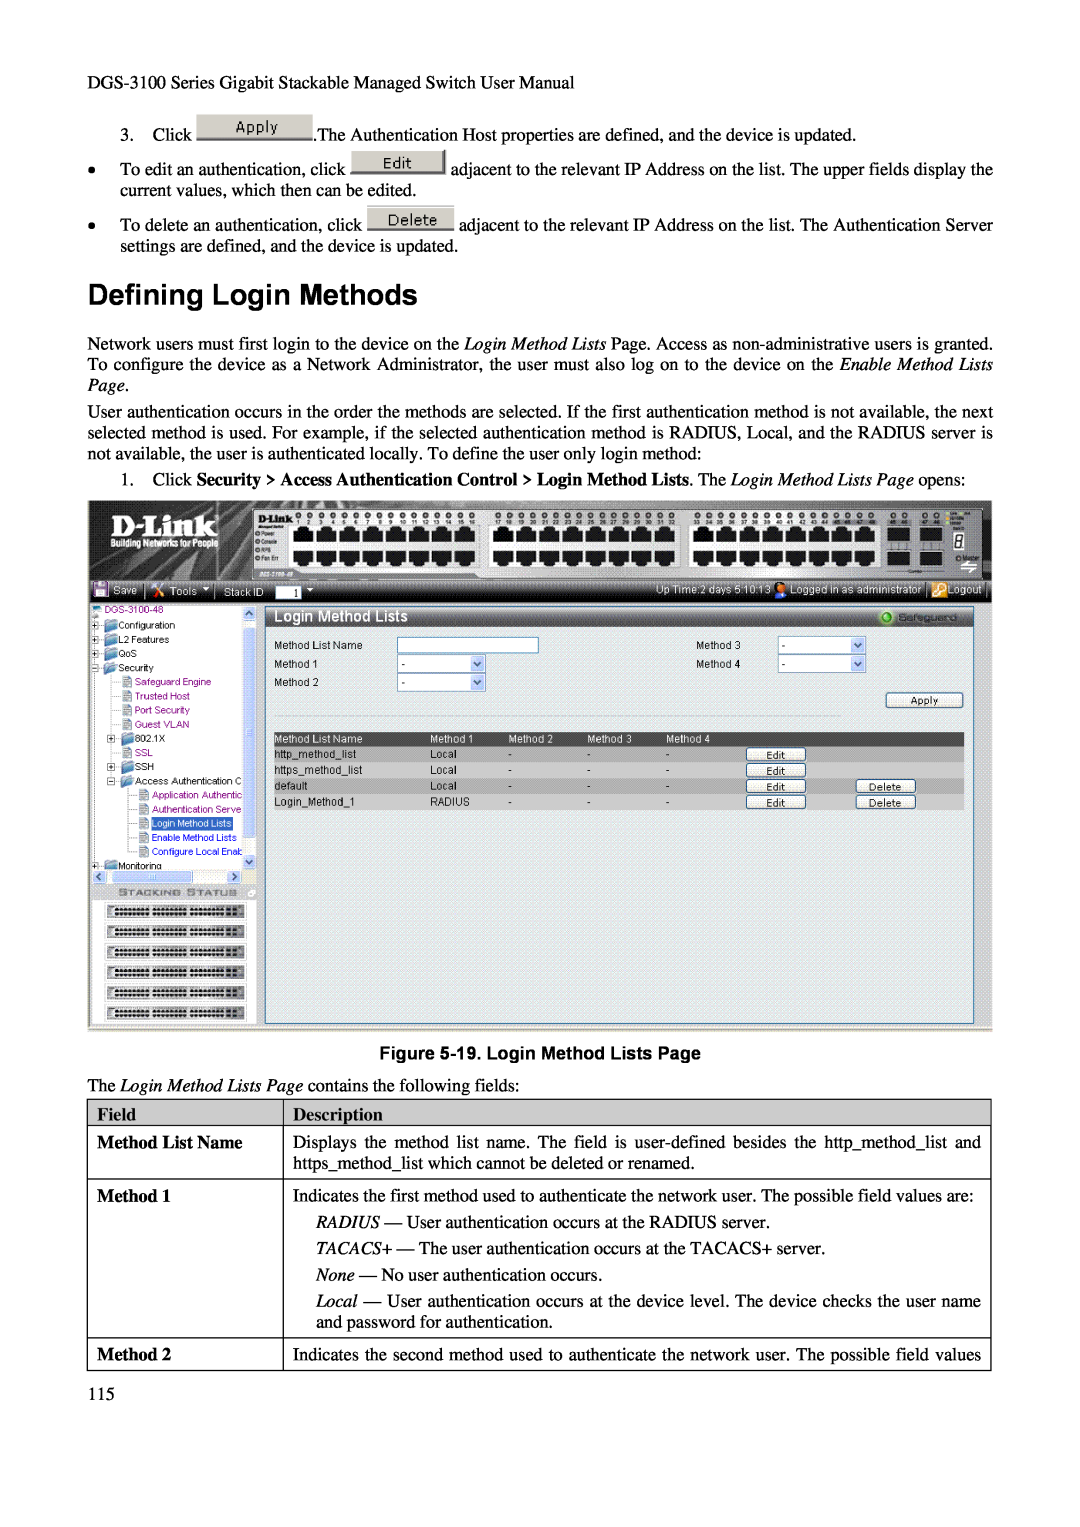 D-Link DGS-3100 Defining Login Methods, 19. Login Method Lists Page, Field Method List Name Method Method, Description 